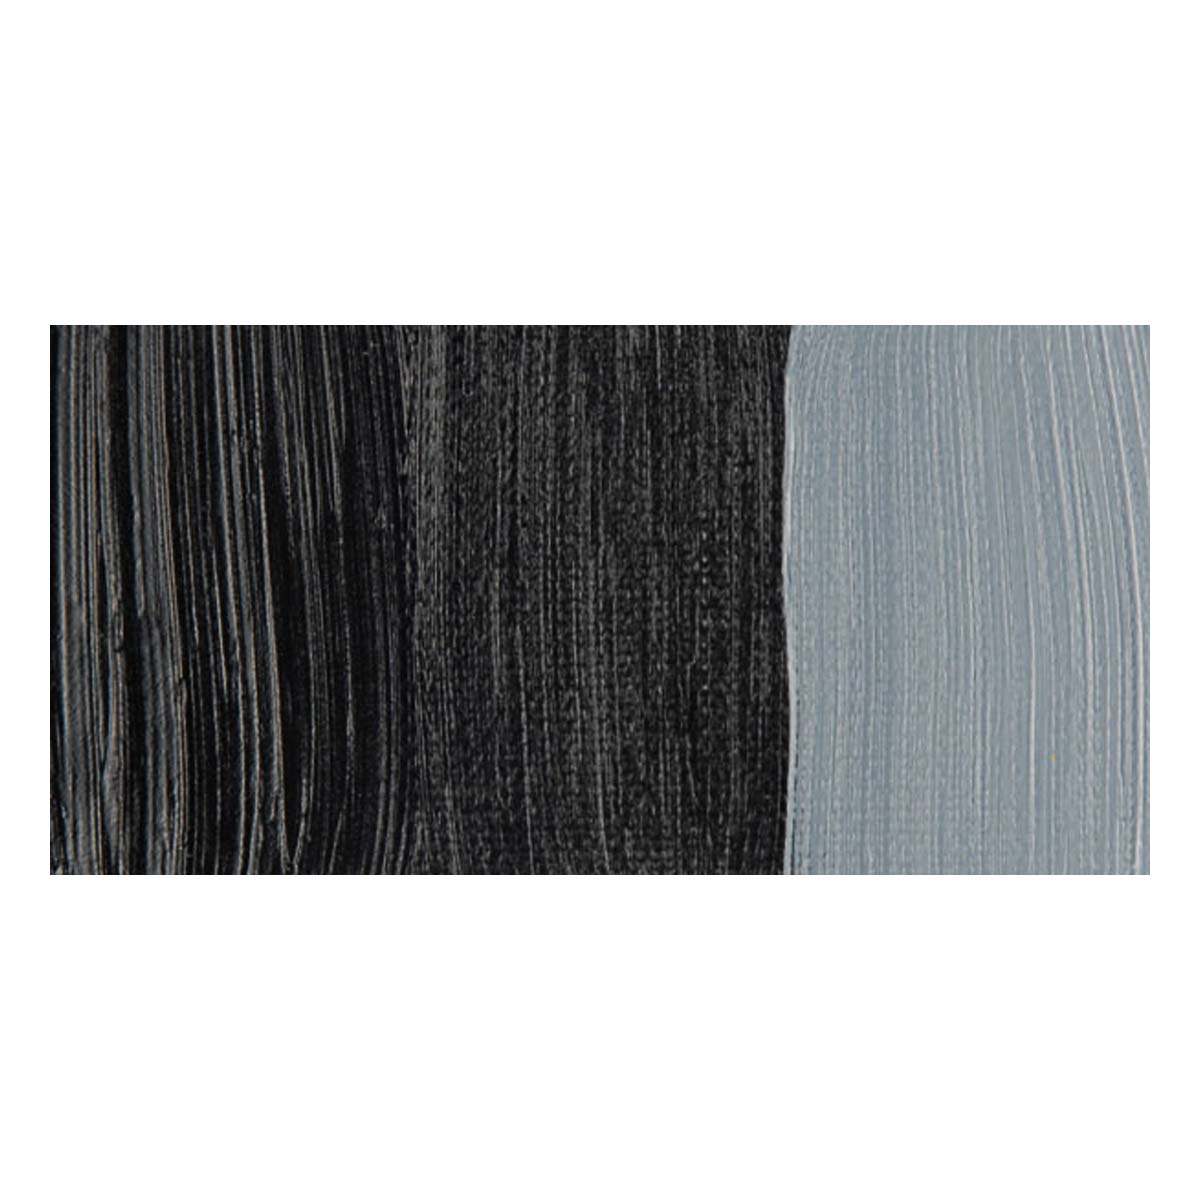 Bob Ross Oil Color - Midnight Black, 6.8 oz tube